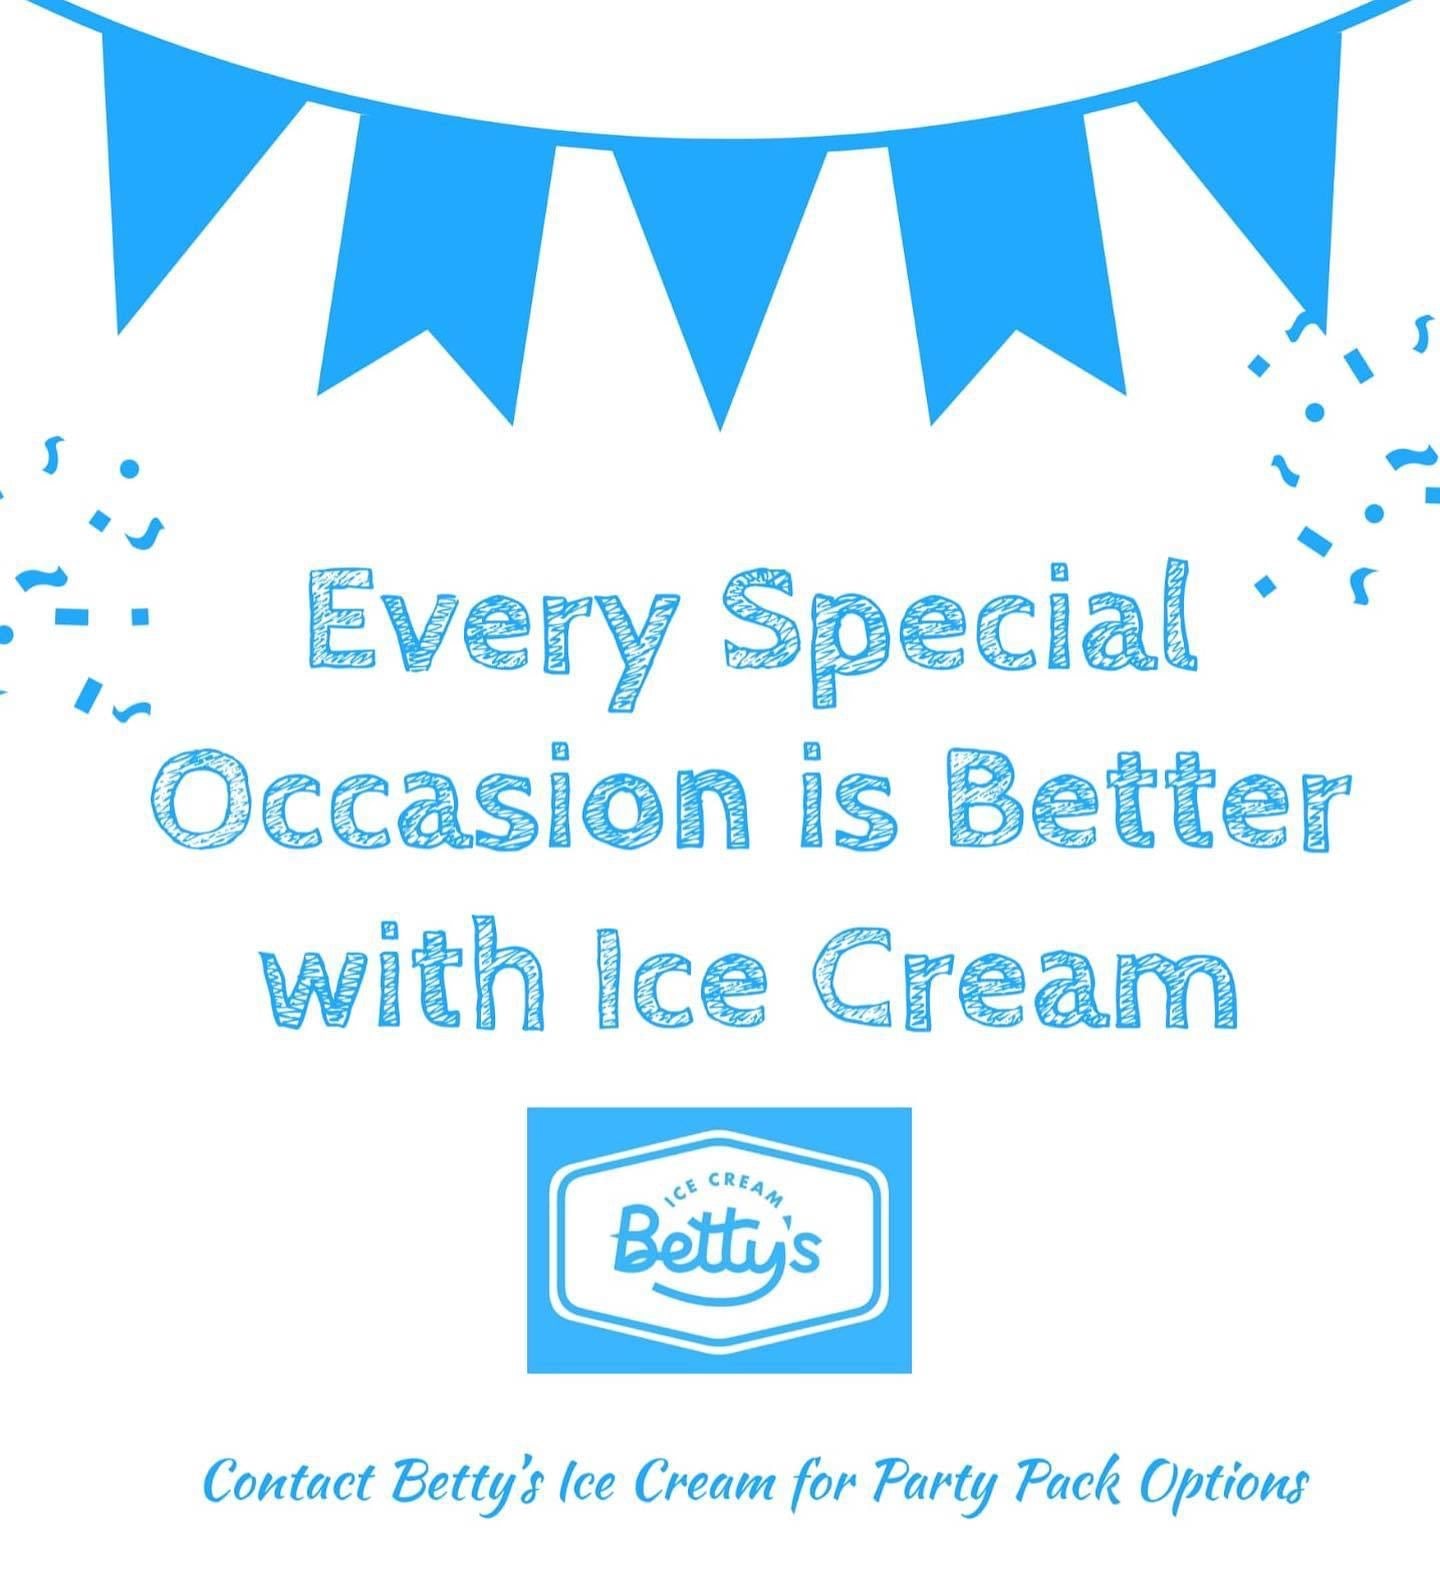 Betty's Ice Cream Birthday Celebration Pack